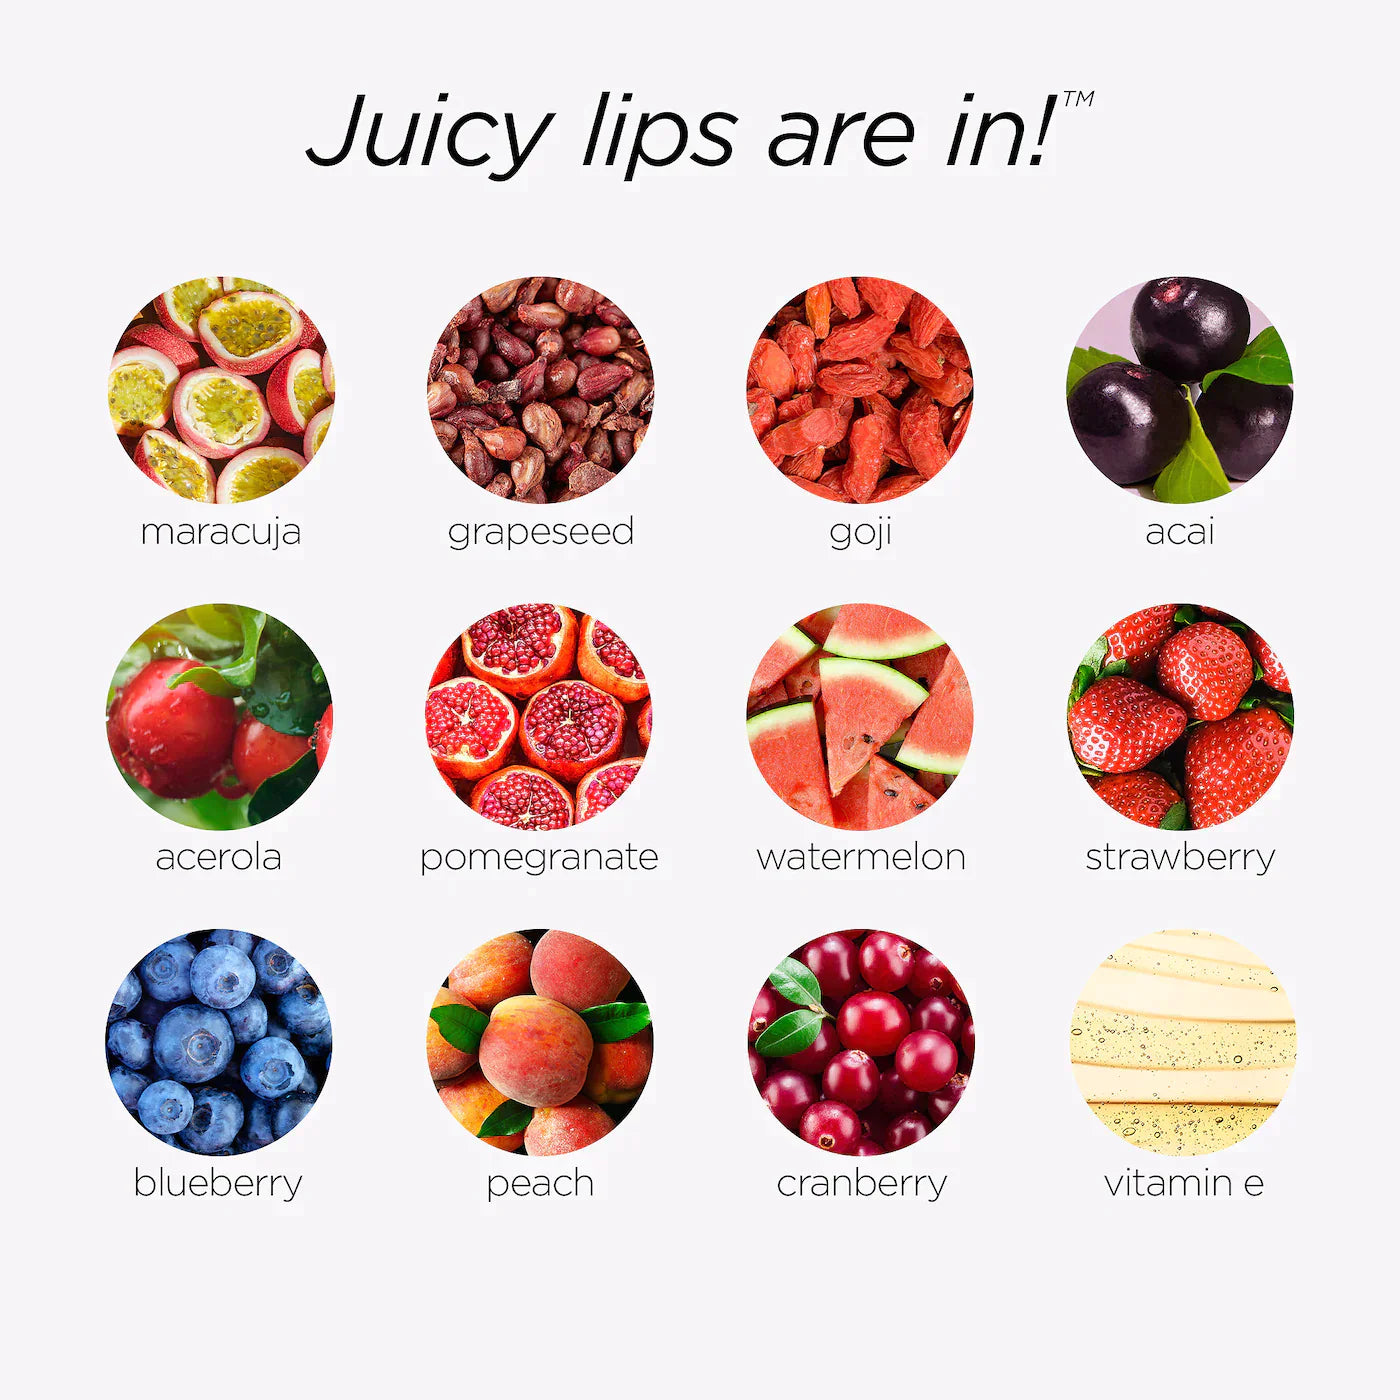 Tarte Maracuja Juicy Lip Plump | White Peach